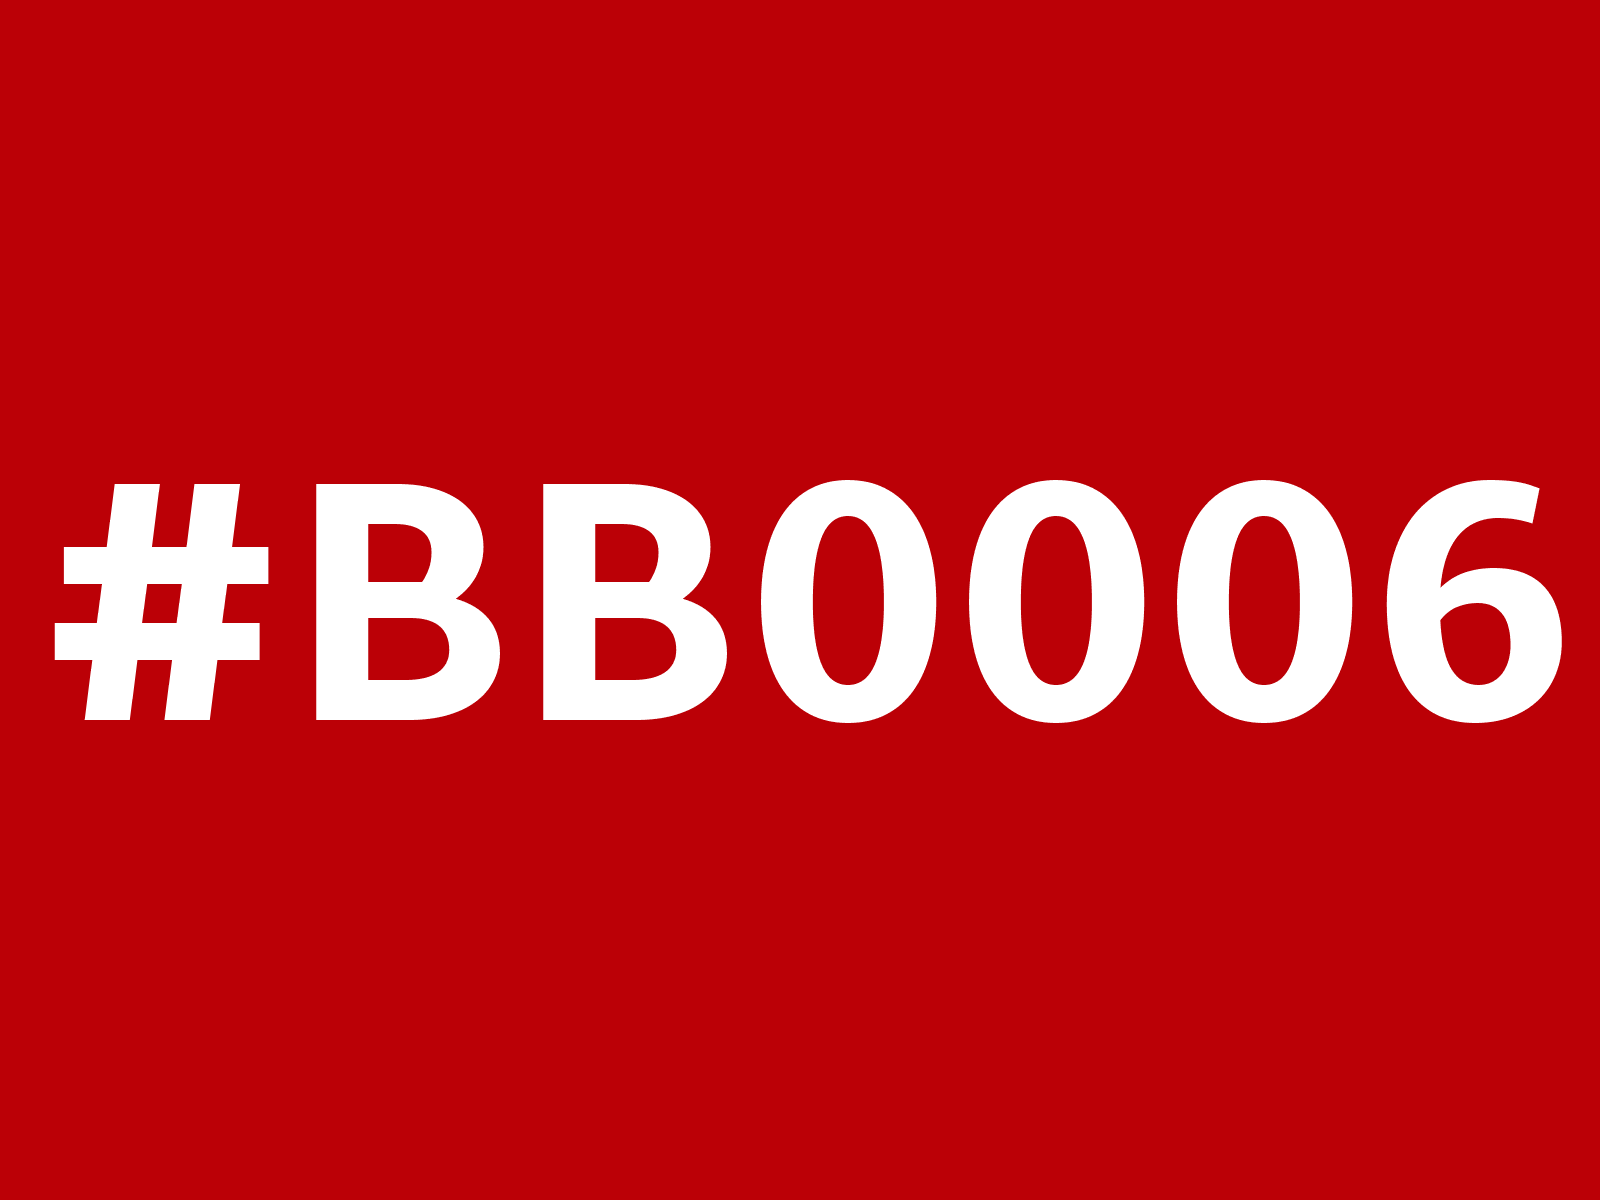 bb0006